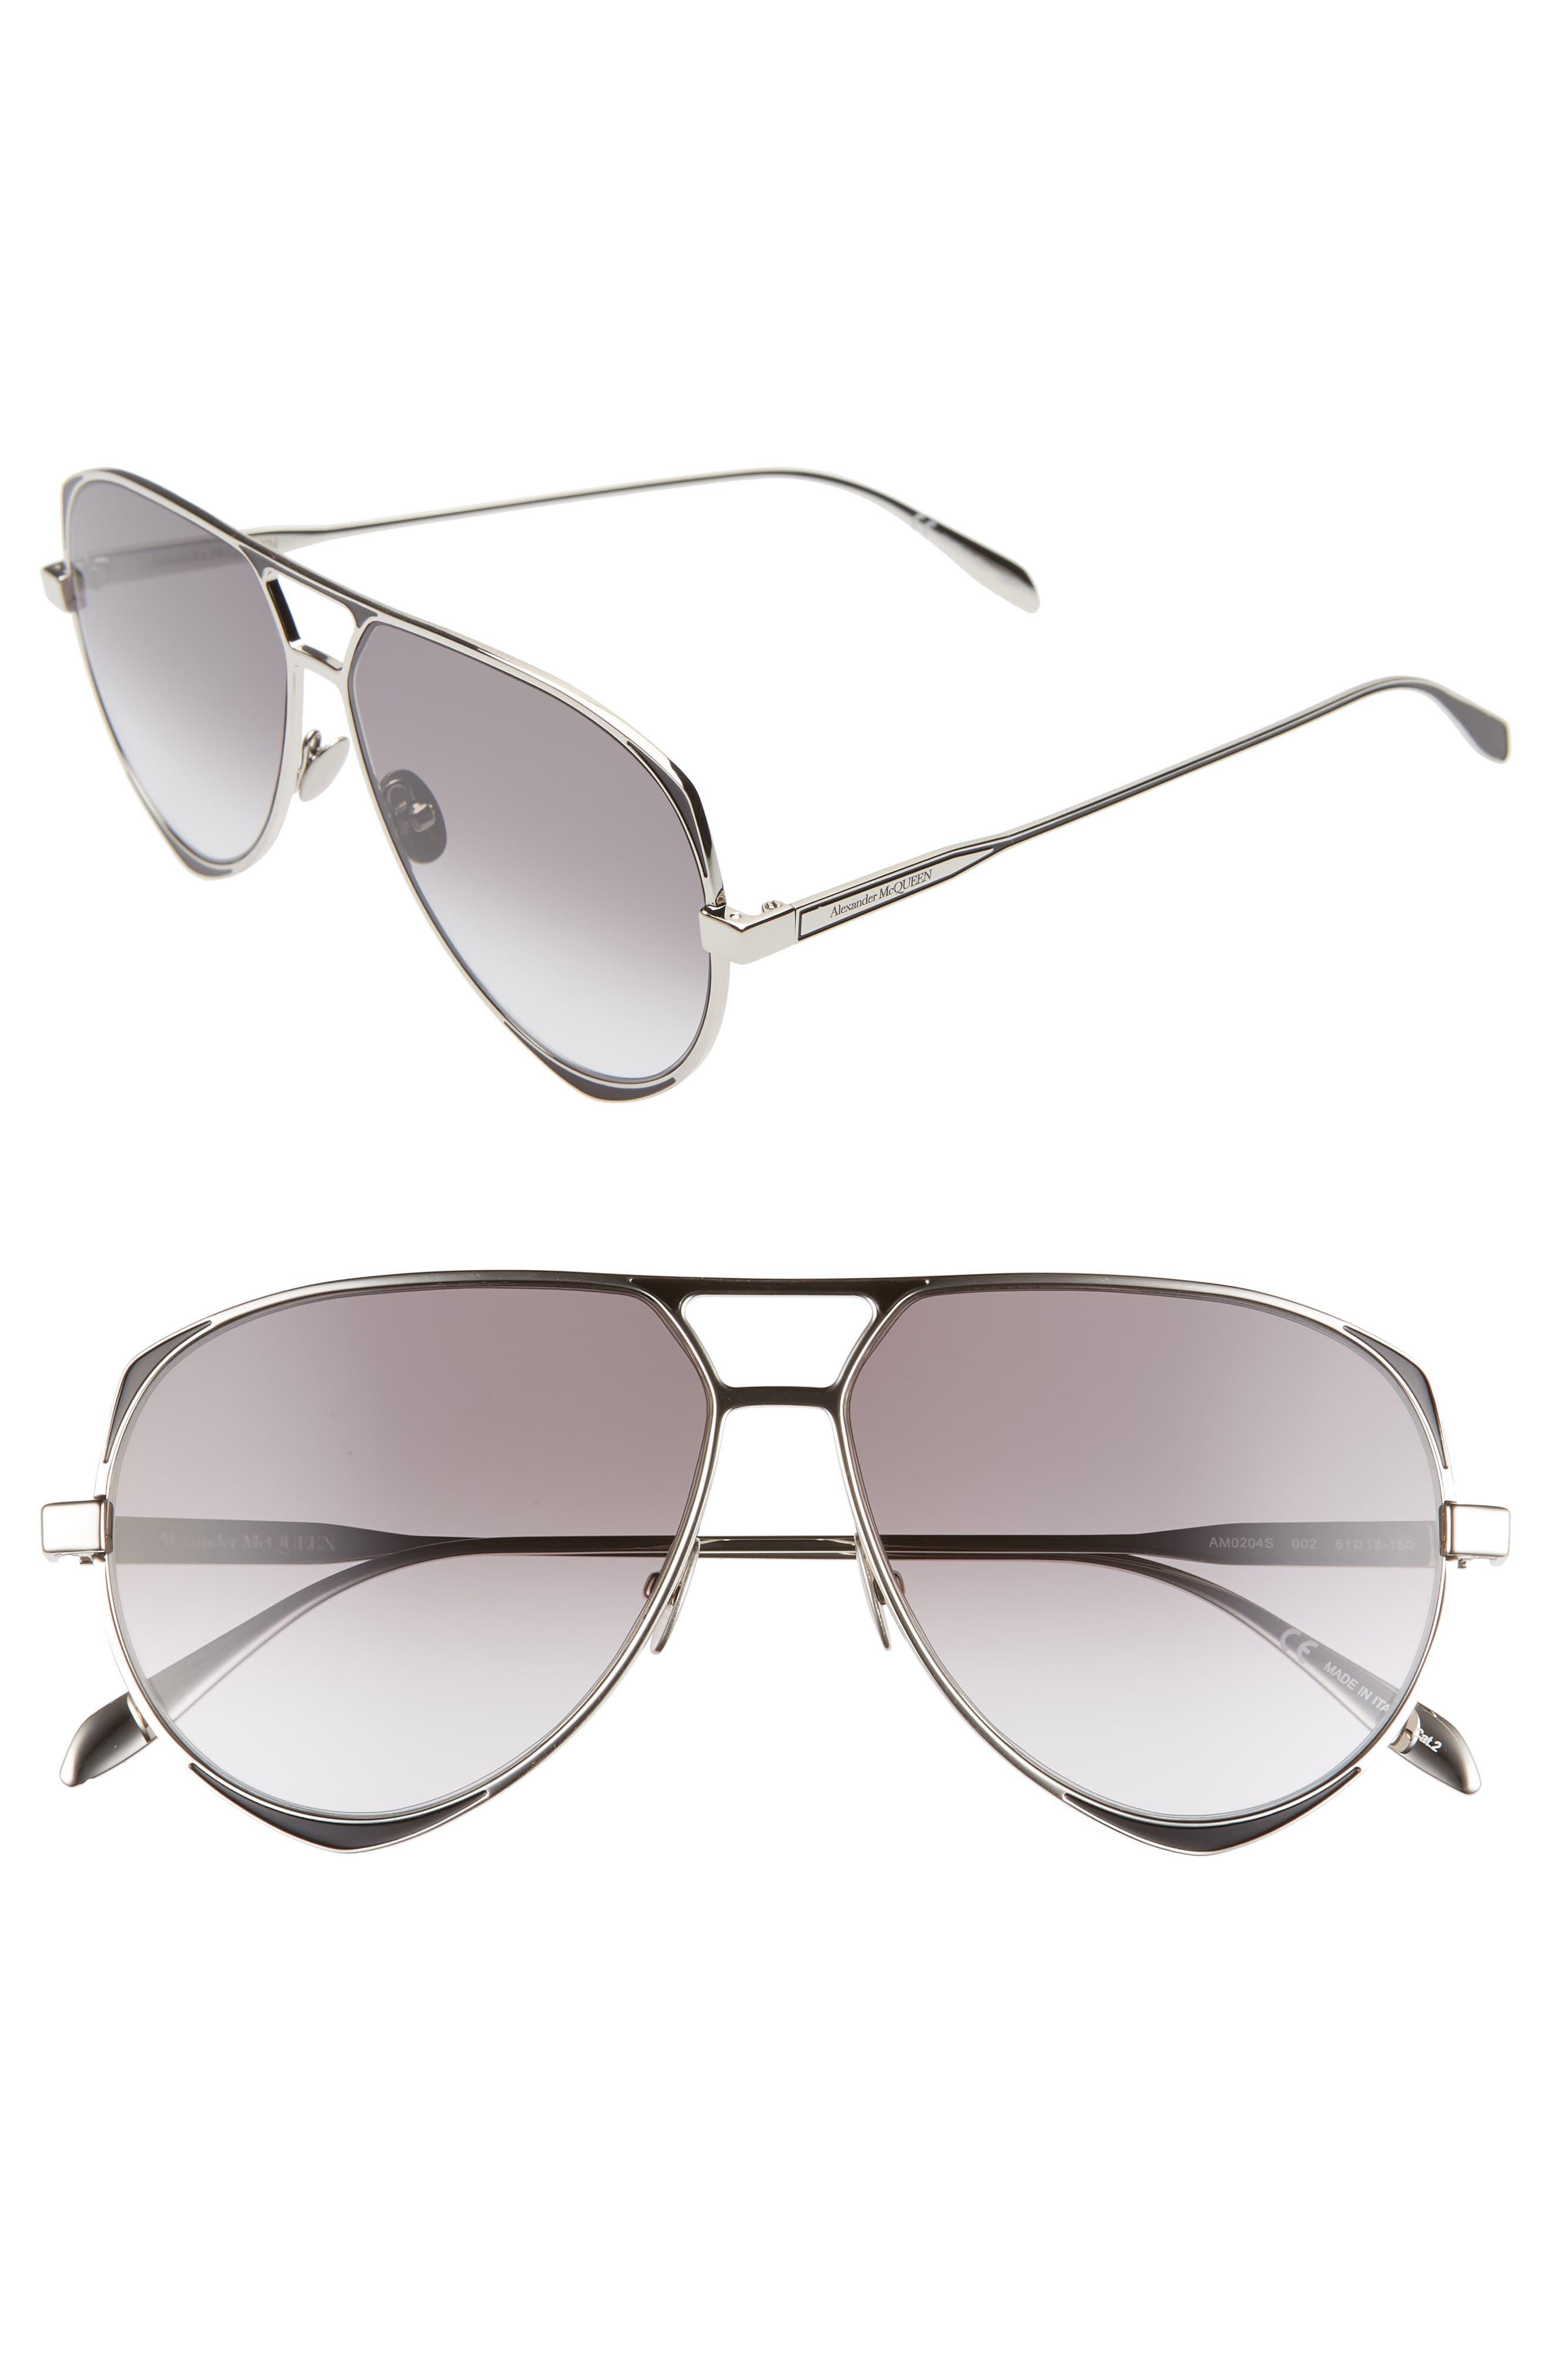 Alexander McQueen 61mm Aviator Sunglasses - Shiny Silver/ Black in